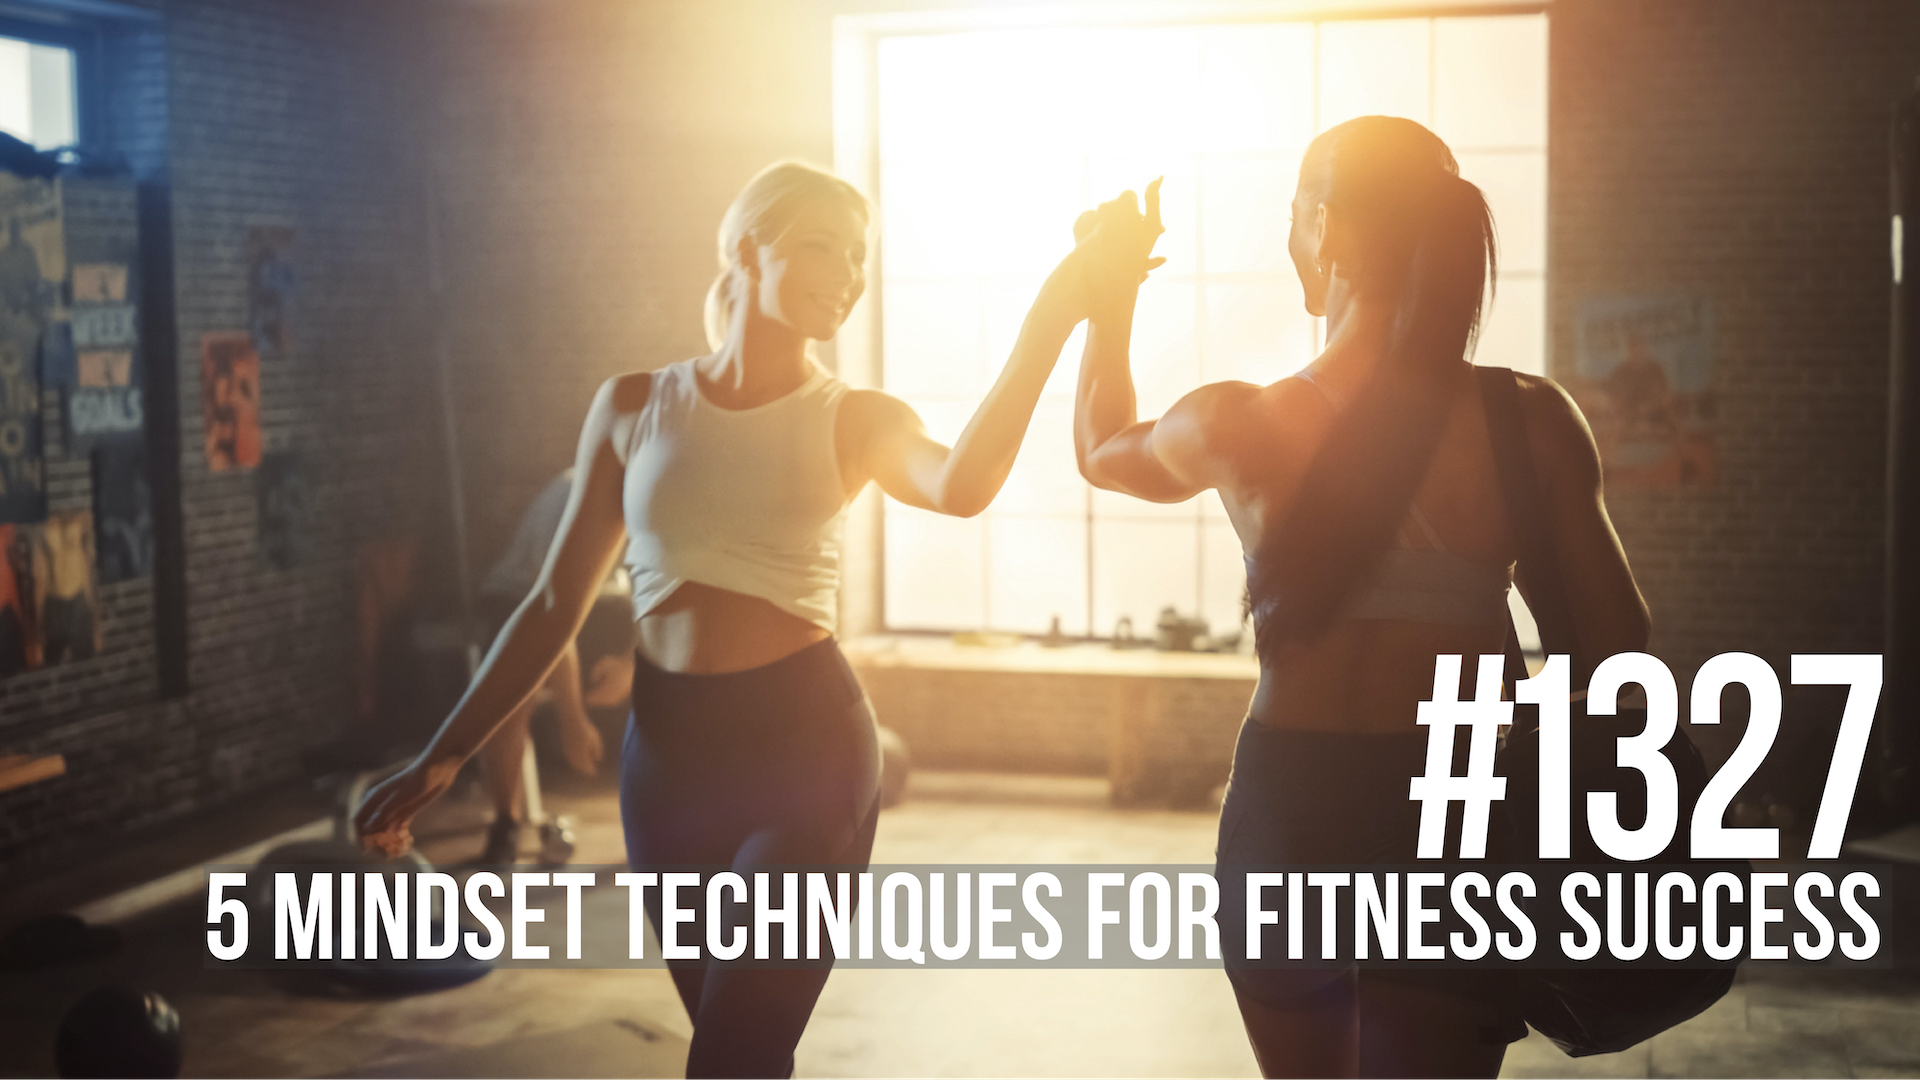 1327: Five Mindset Techniques for Fitness Success